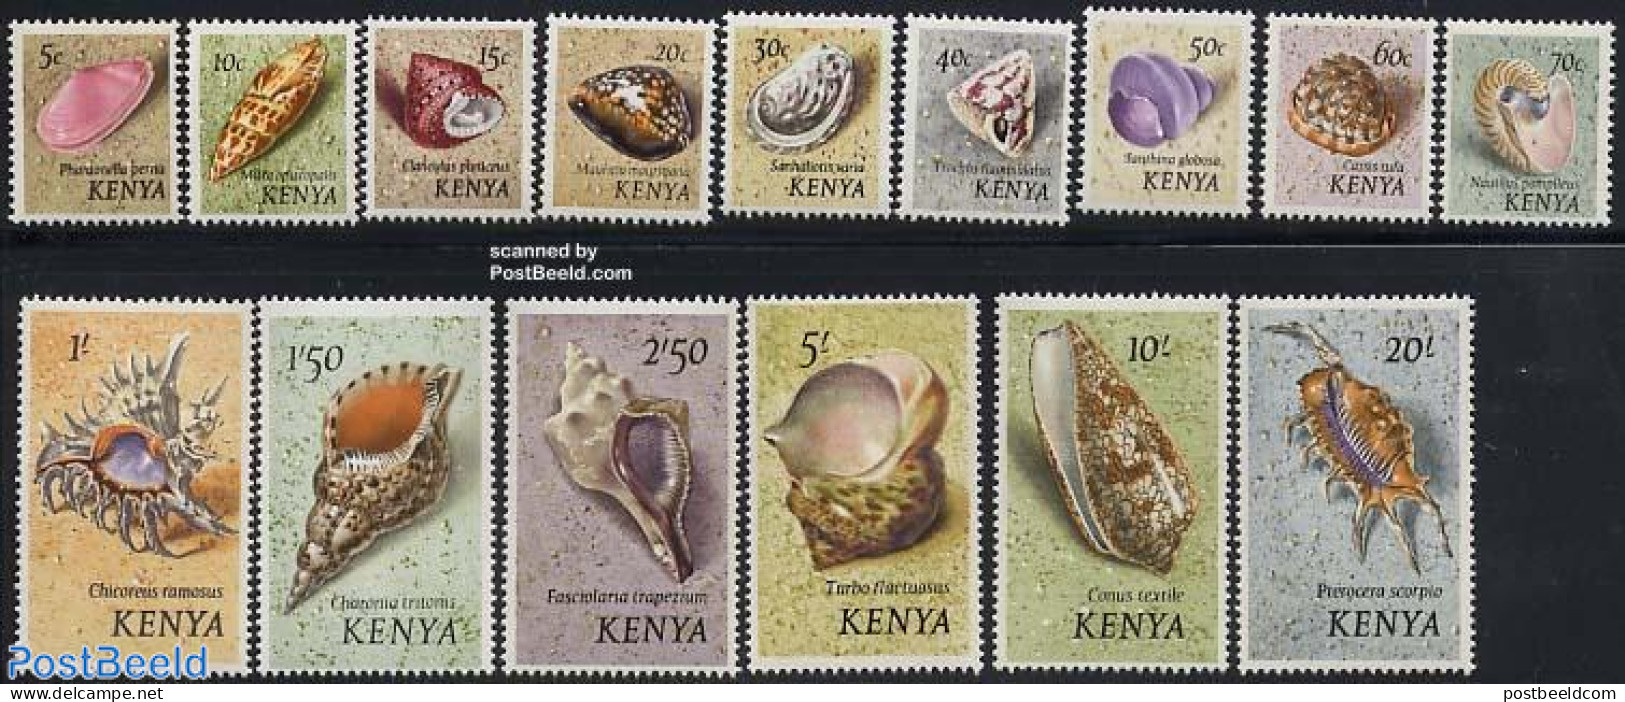 Kenia 1971 Definitives, Shells 15v, Mint NH, Nature - Shells & Crustaceans - Marine Life